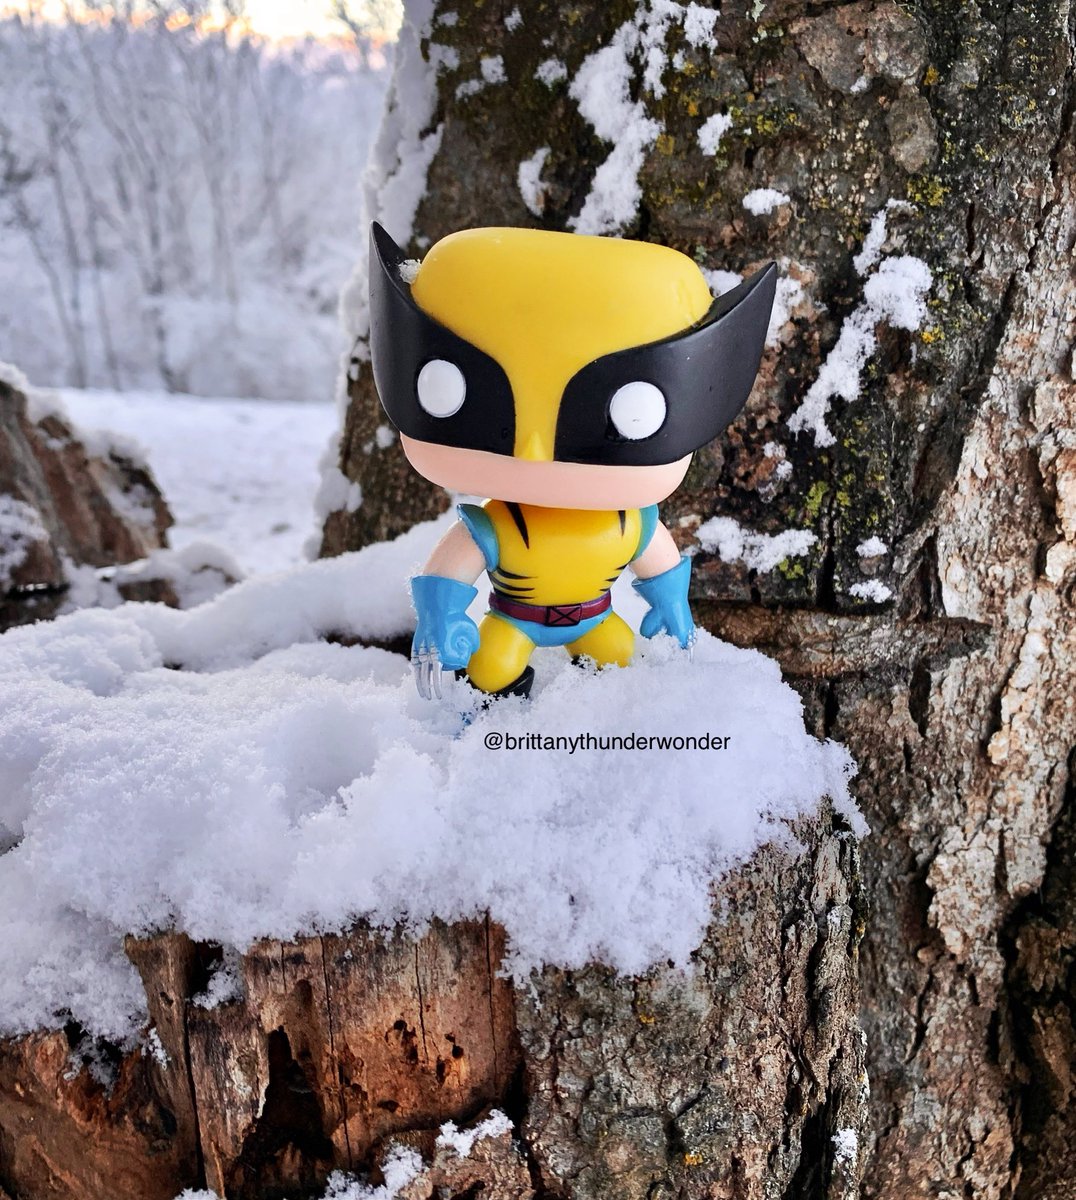 ❄️Wolverine❄️ #Wolverine #XMen #FunkoPhotography #FunkoPhotoADay #FunkoLife #Marvel #Snow #FunkoPop #OriginalFunko #Logan #FunkoPhoto #Funko #Funkos #SnowDay #Snowing